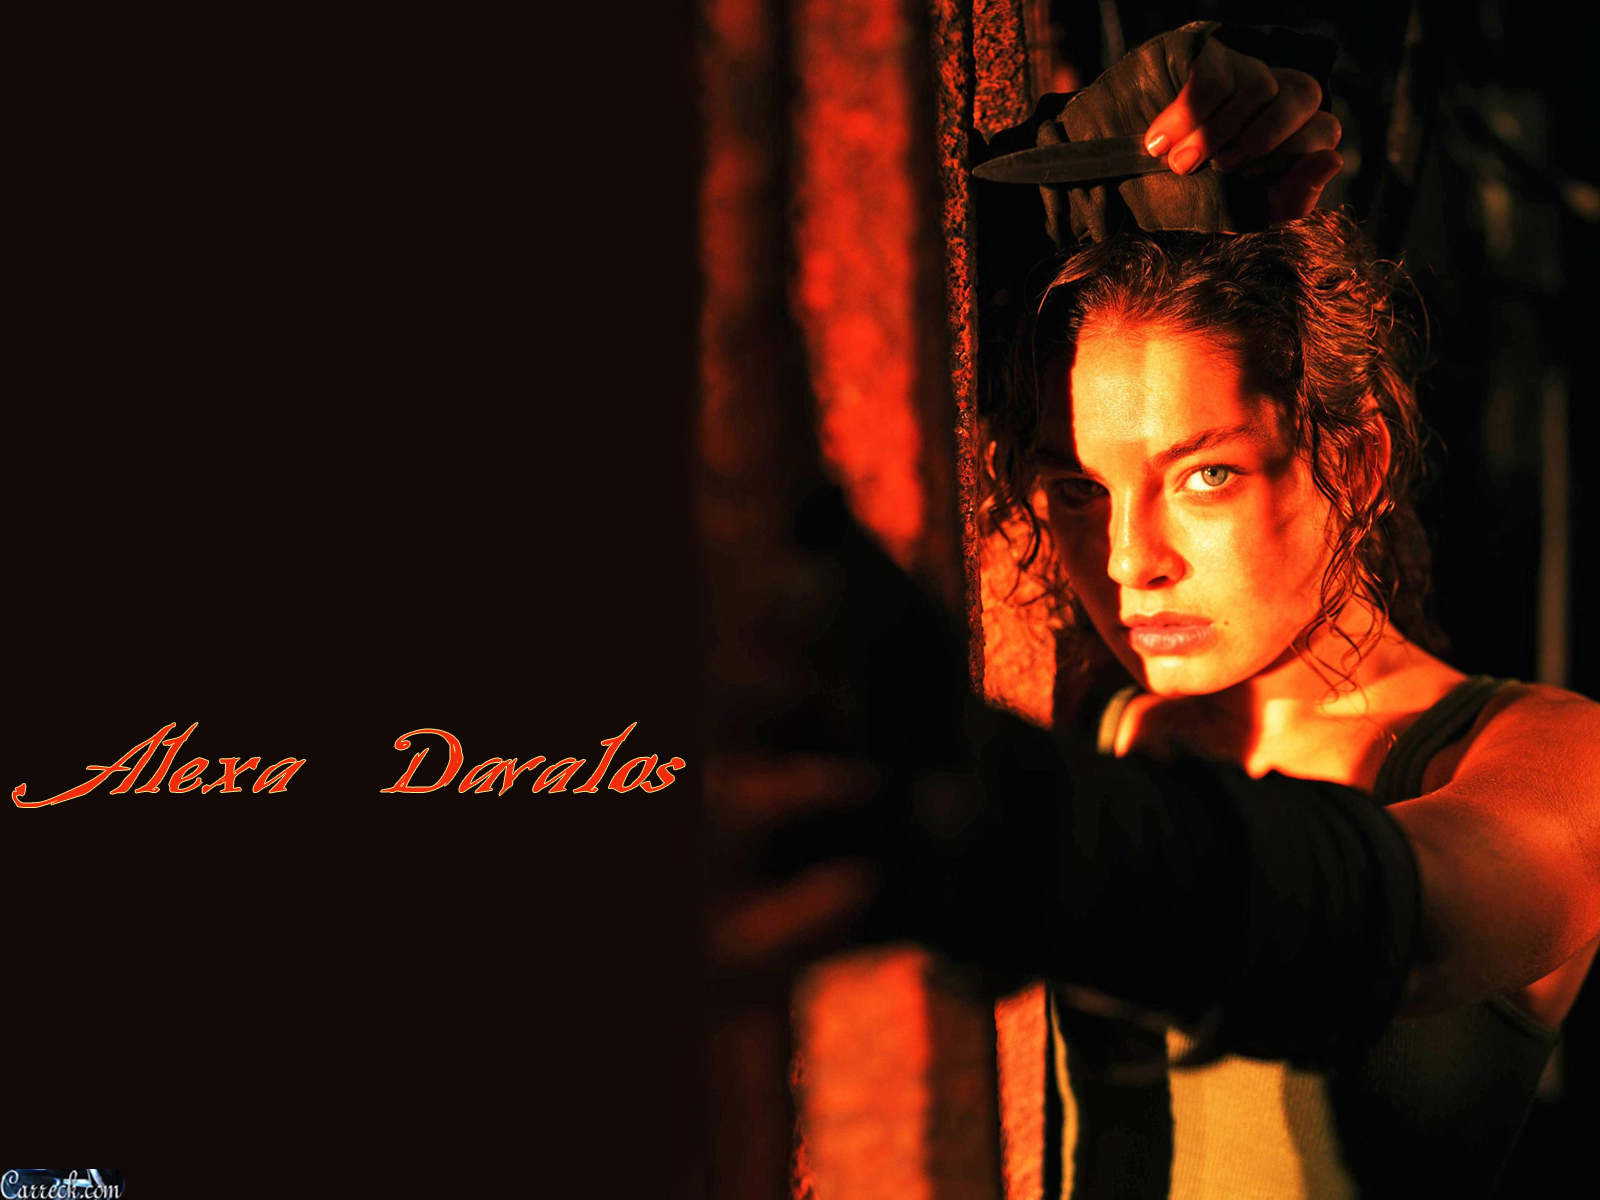 Alexa Davalos HD Images and Wallpapers - Hollywood Actress